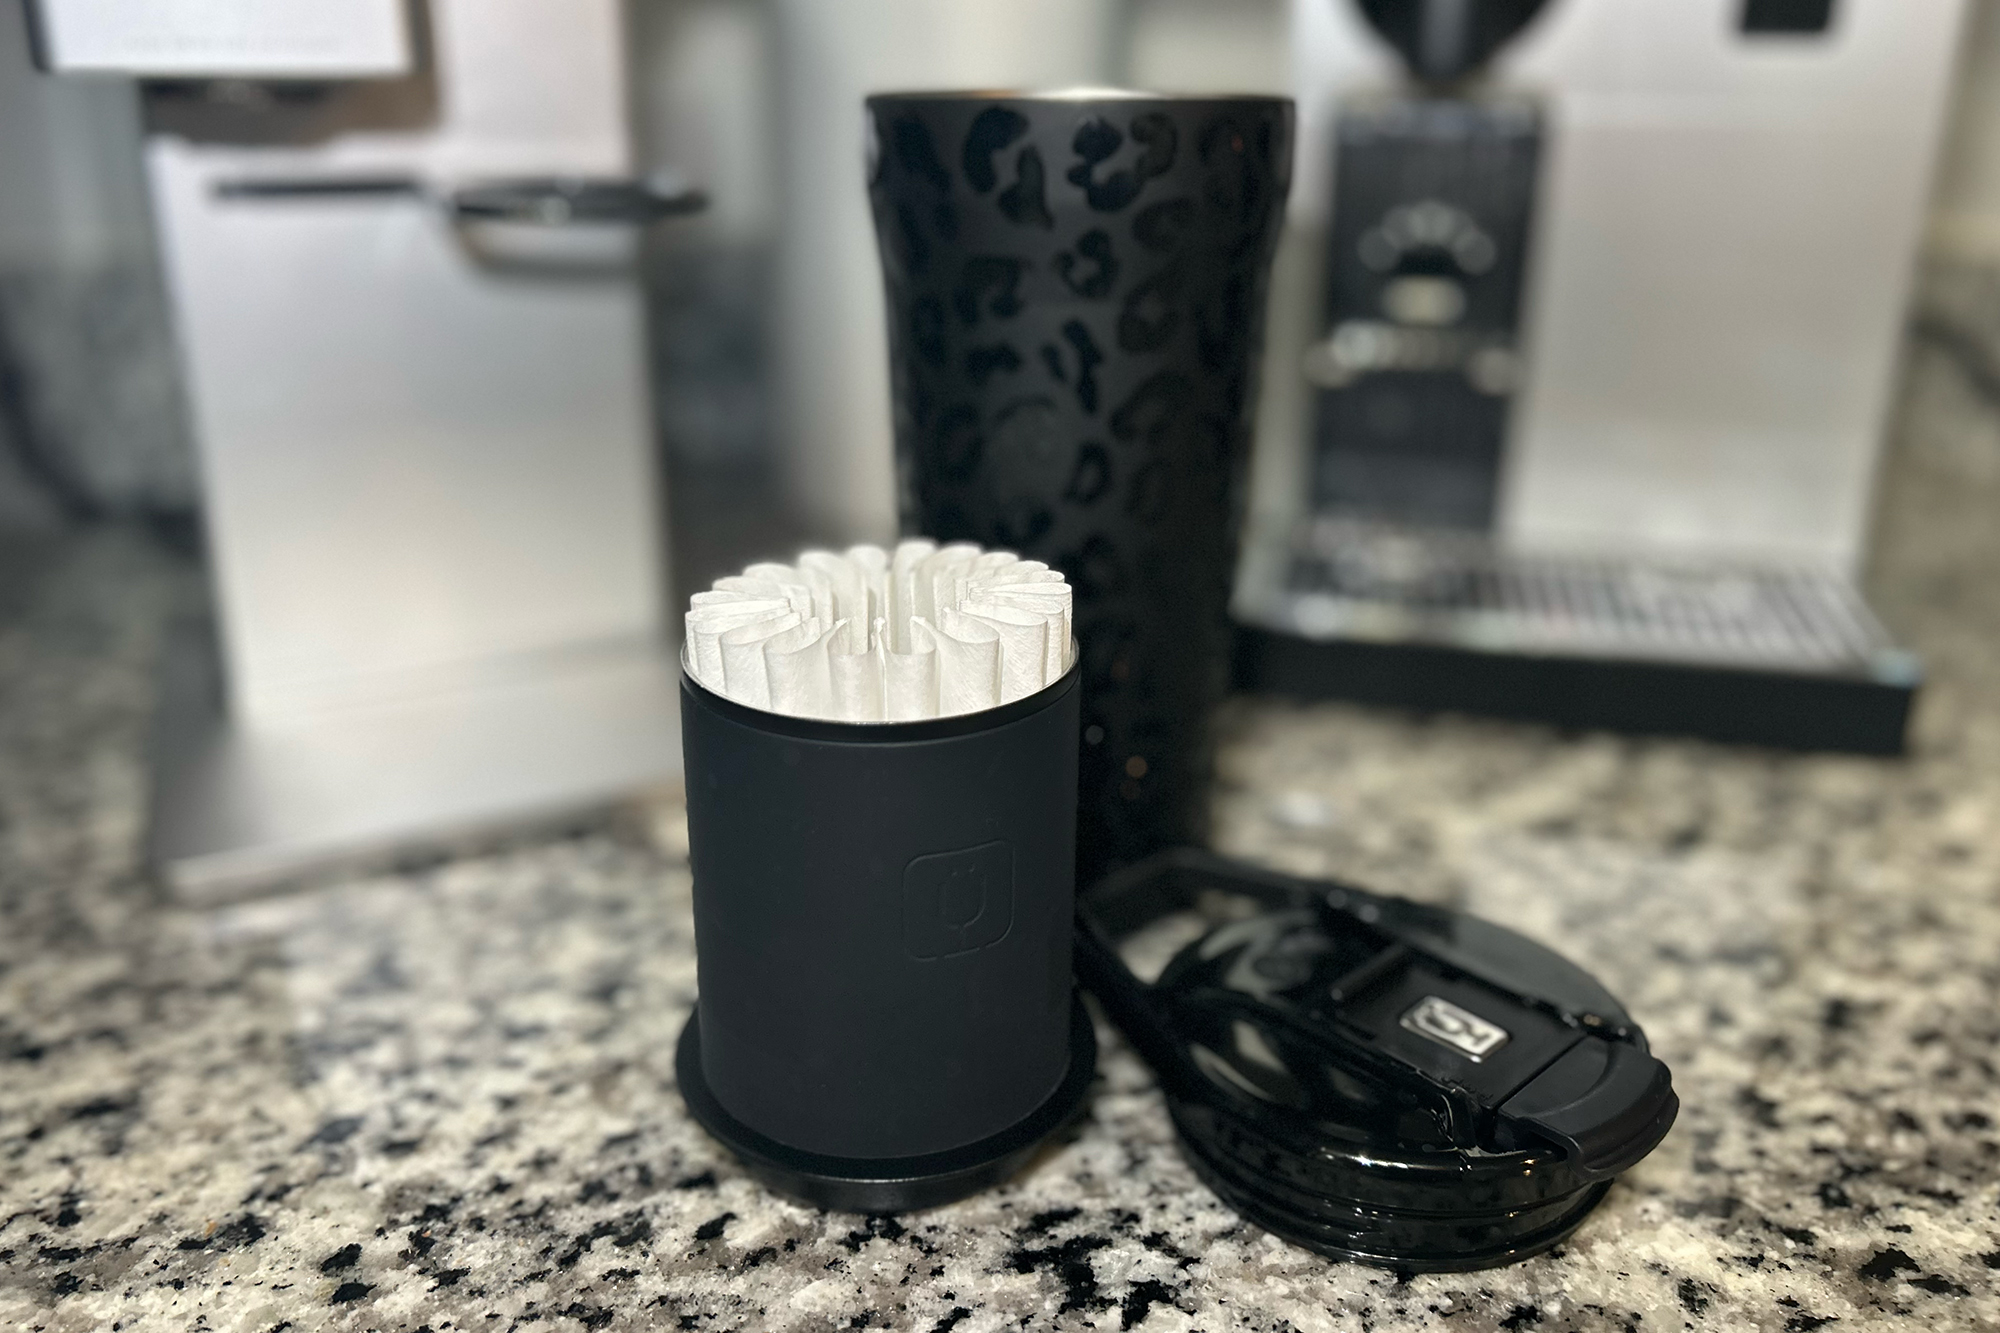 BruMate Coffee Mug Review 2023: Make Pour Over Coffee on the Go